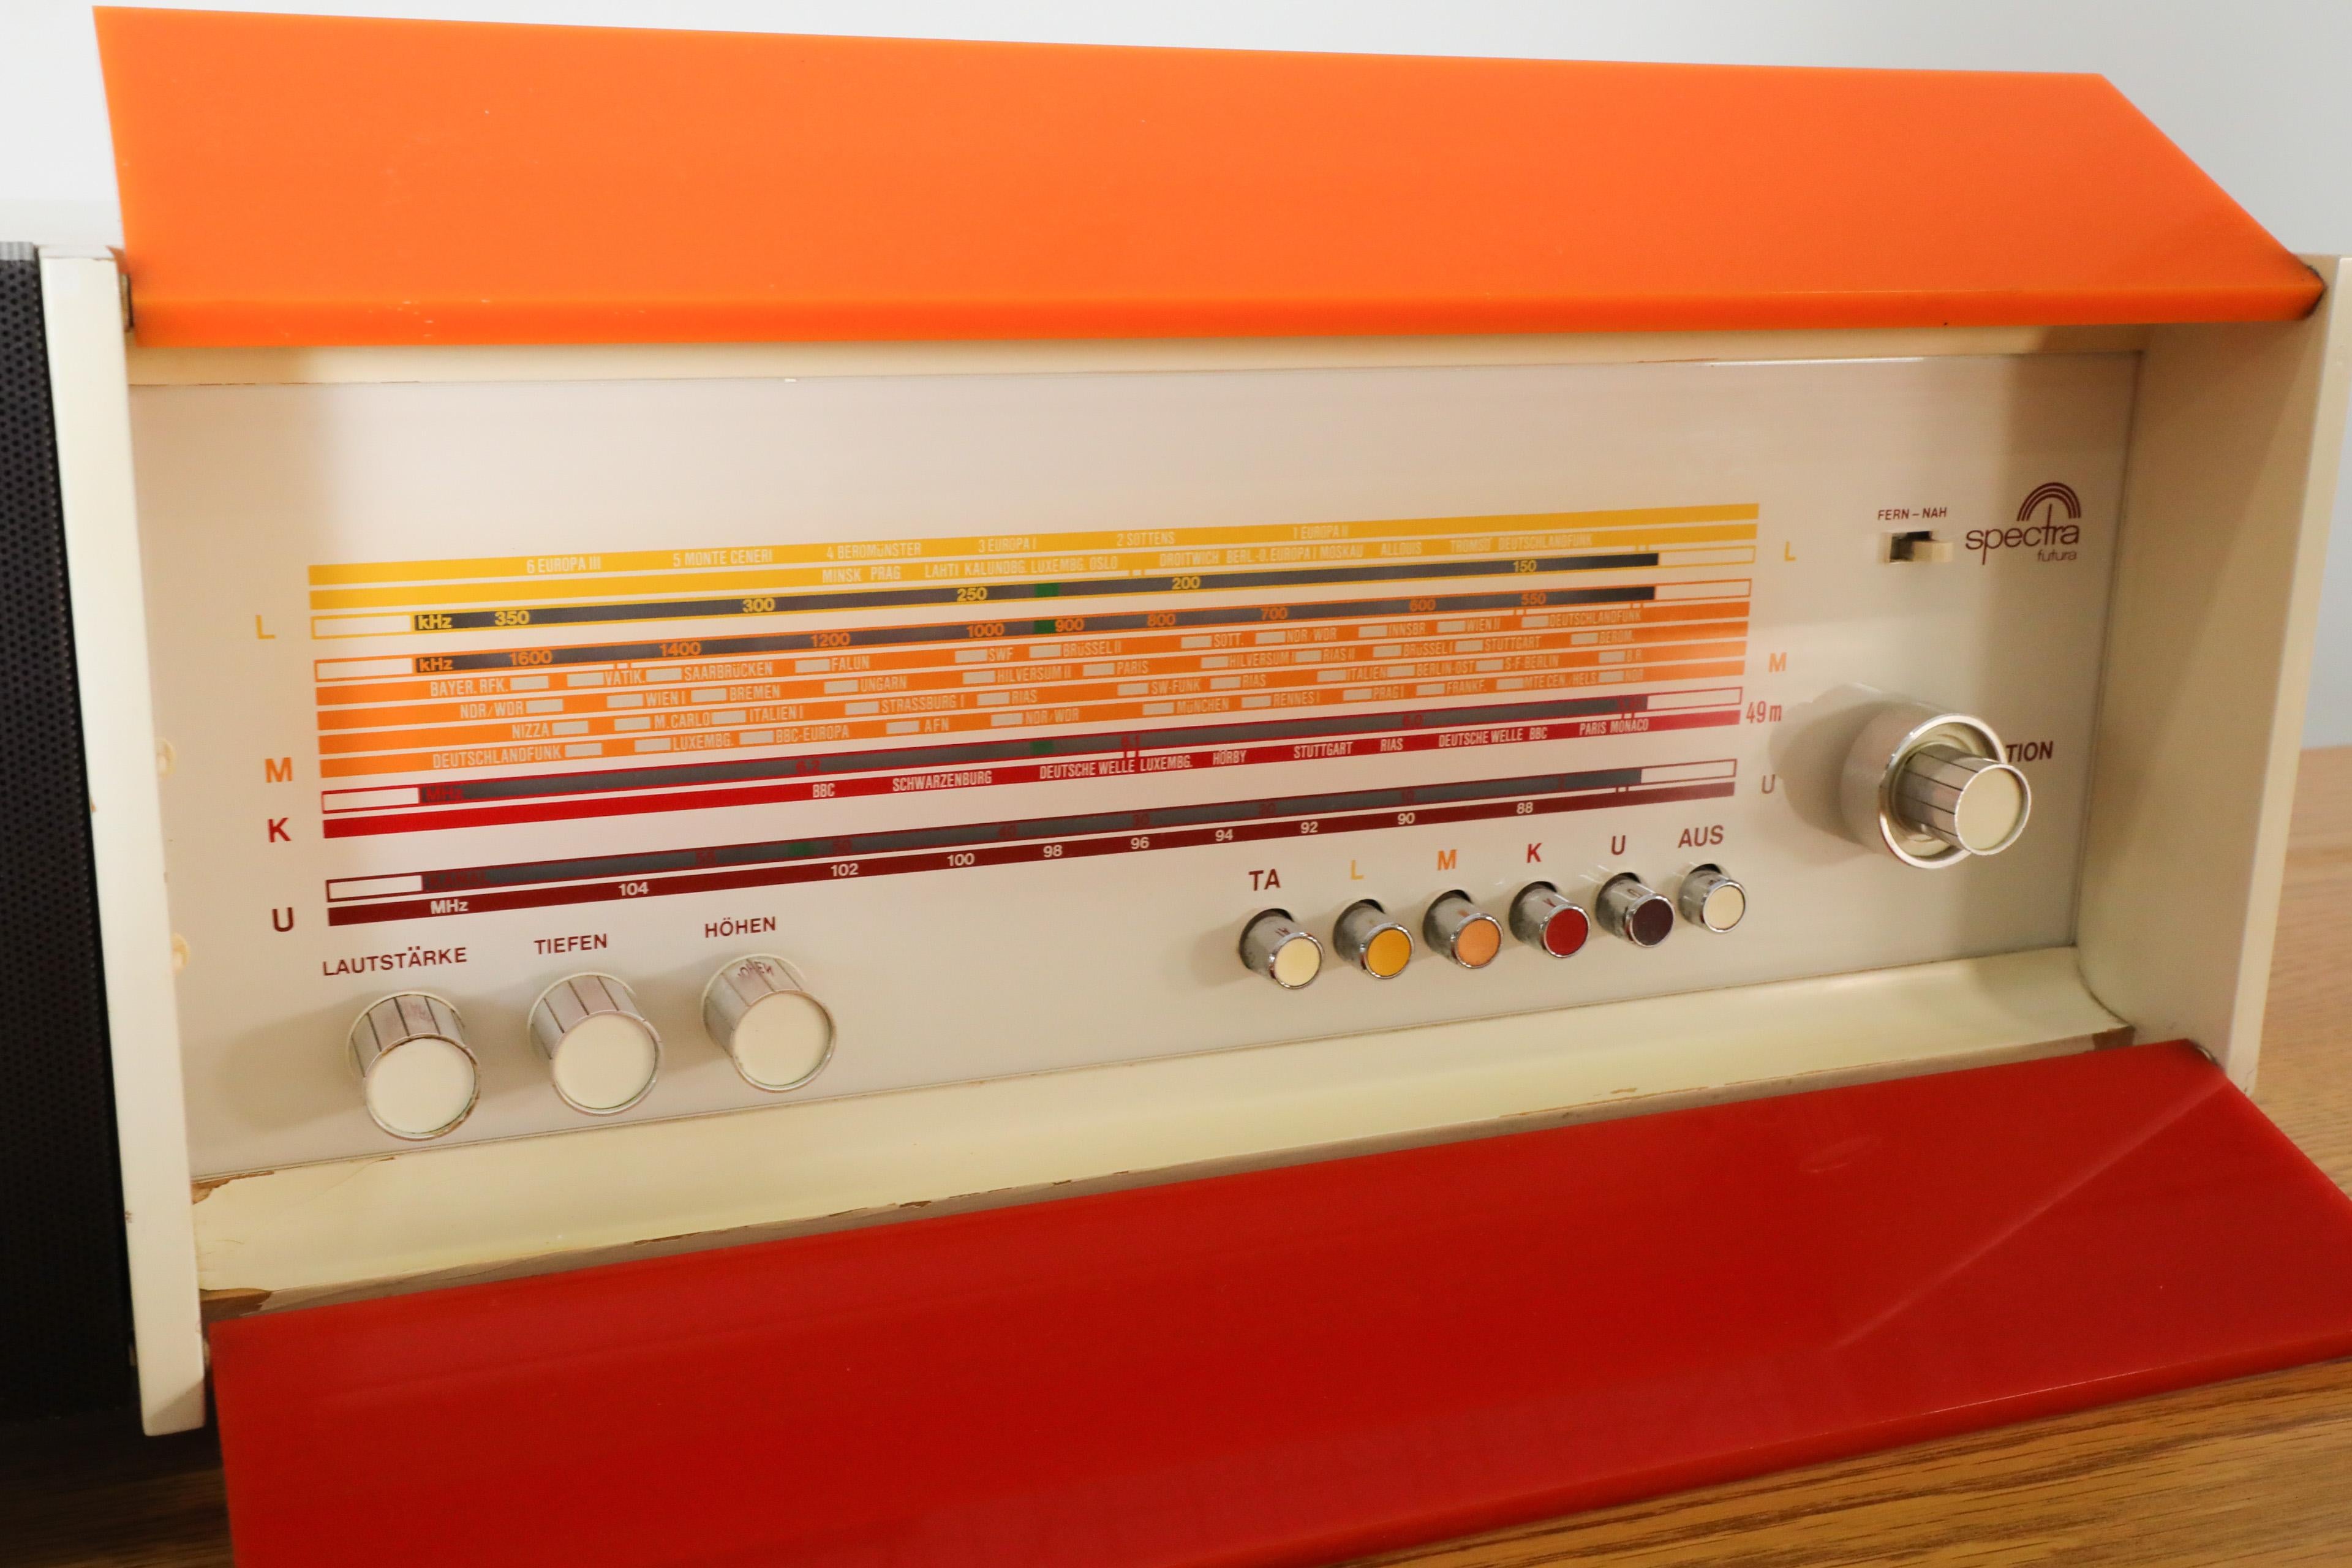 Radio à transistors Spectra Futura de Raymond Loewy Design/One en rouge et orange en vente 7